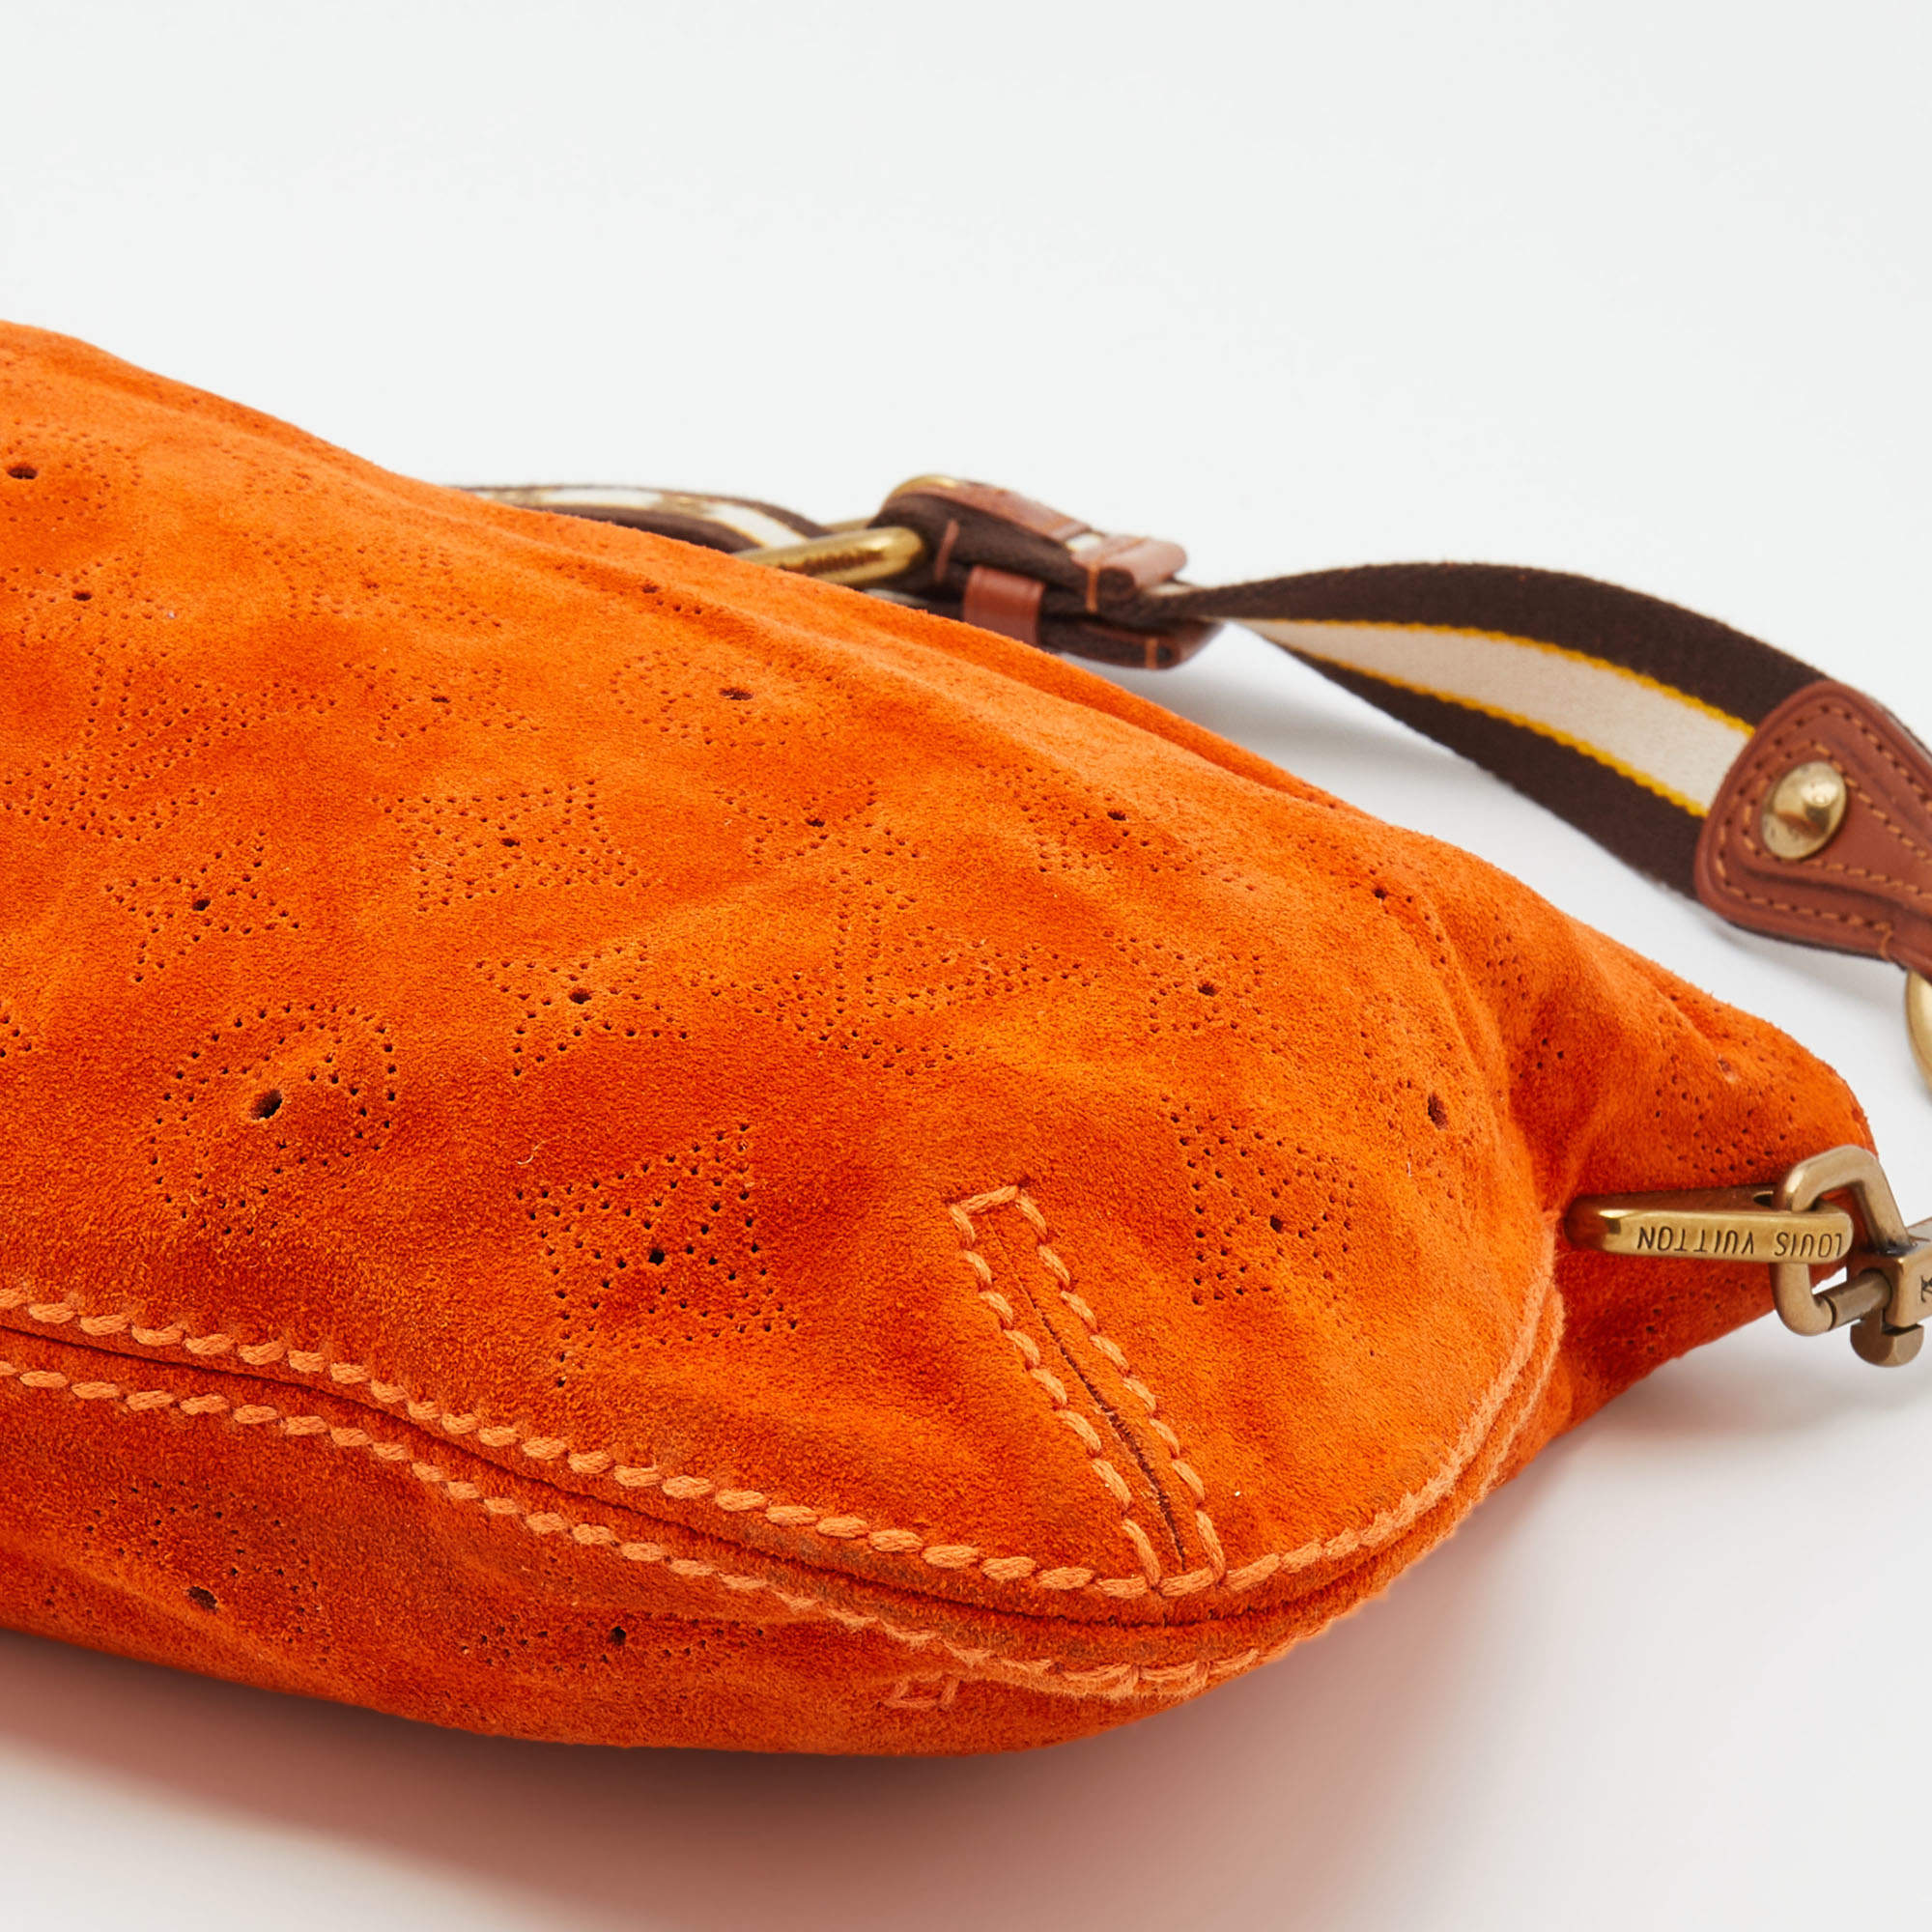 Authenic Louis Vuitton Suhali Lockit MM Handbag for Sale in Orange, CA -  OfferUp